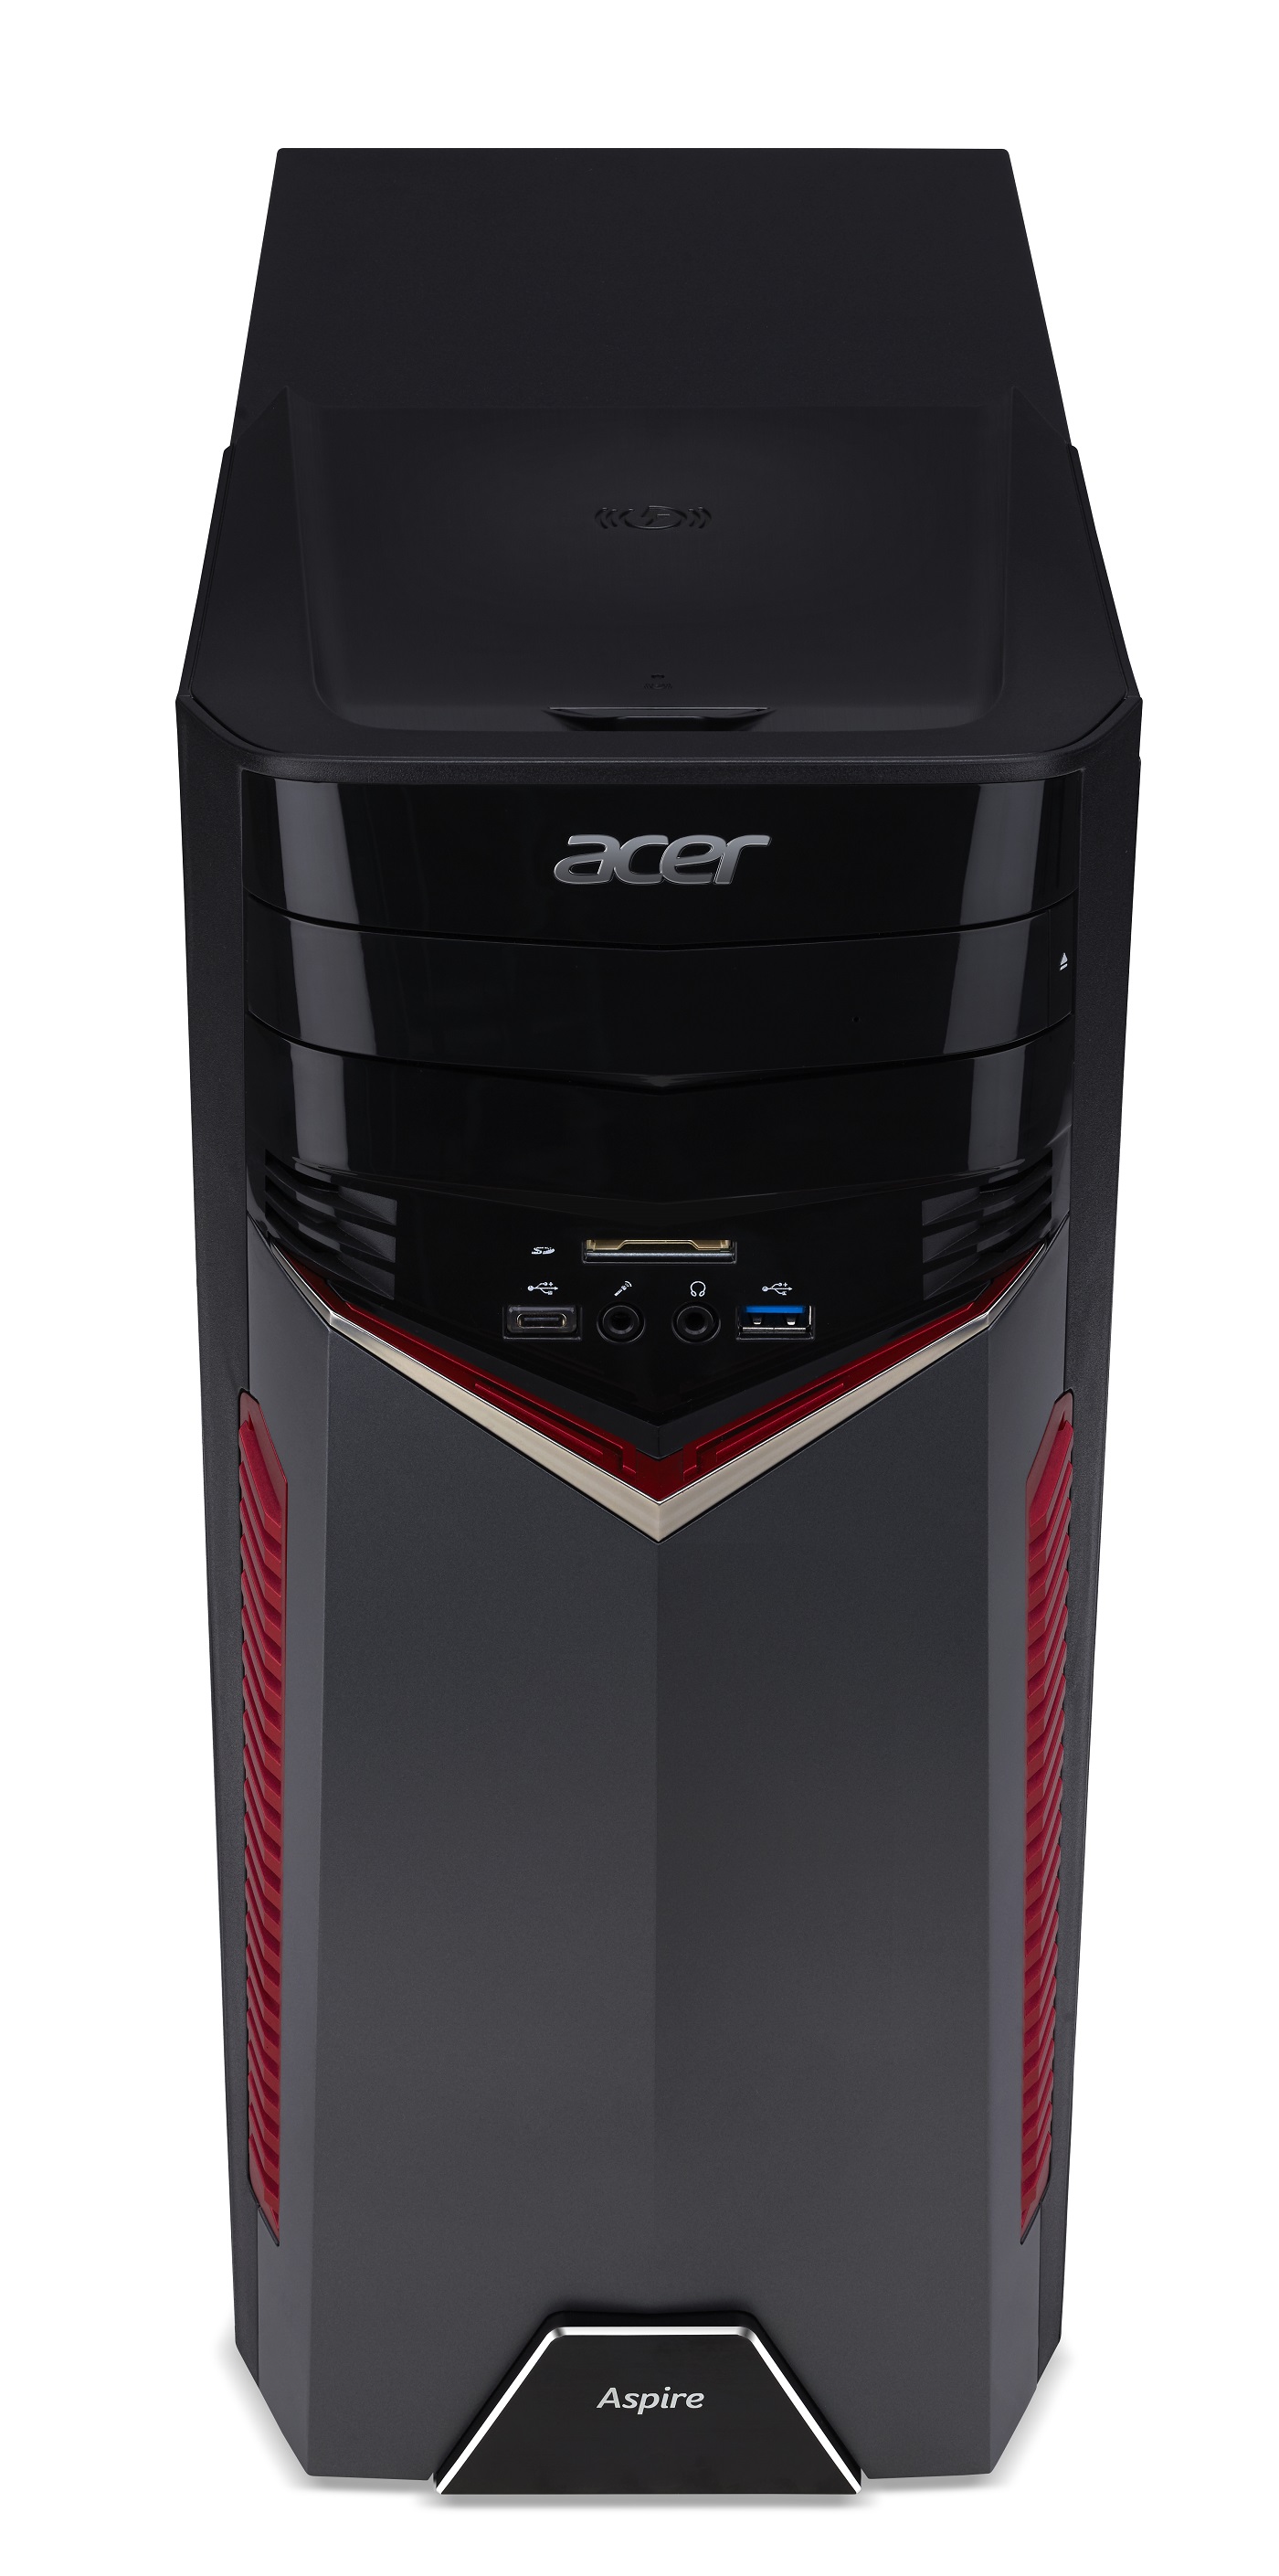 Acer Aspire Gaming desktop, Intel core i5-7400 processor, 3 GHZ, 8GB DDR4 Memory, AMD Radeon RX 480 Graphic Card, 1TB Hard drive, Windows 10 home, GX-785-ur16 - image 2 of 6